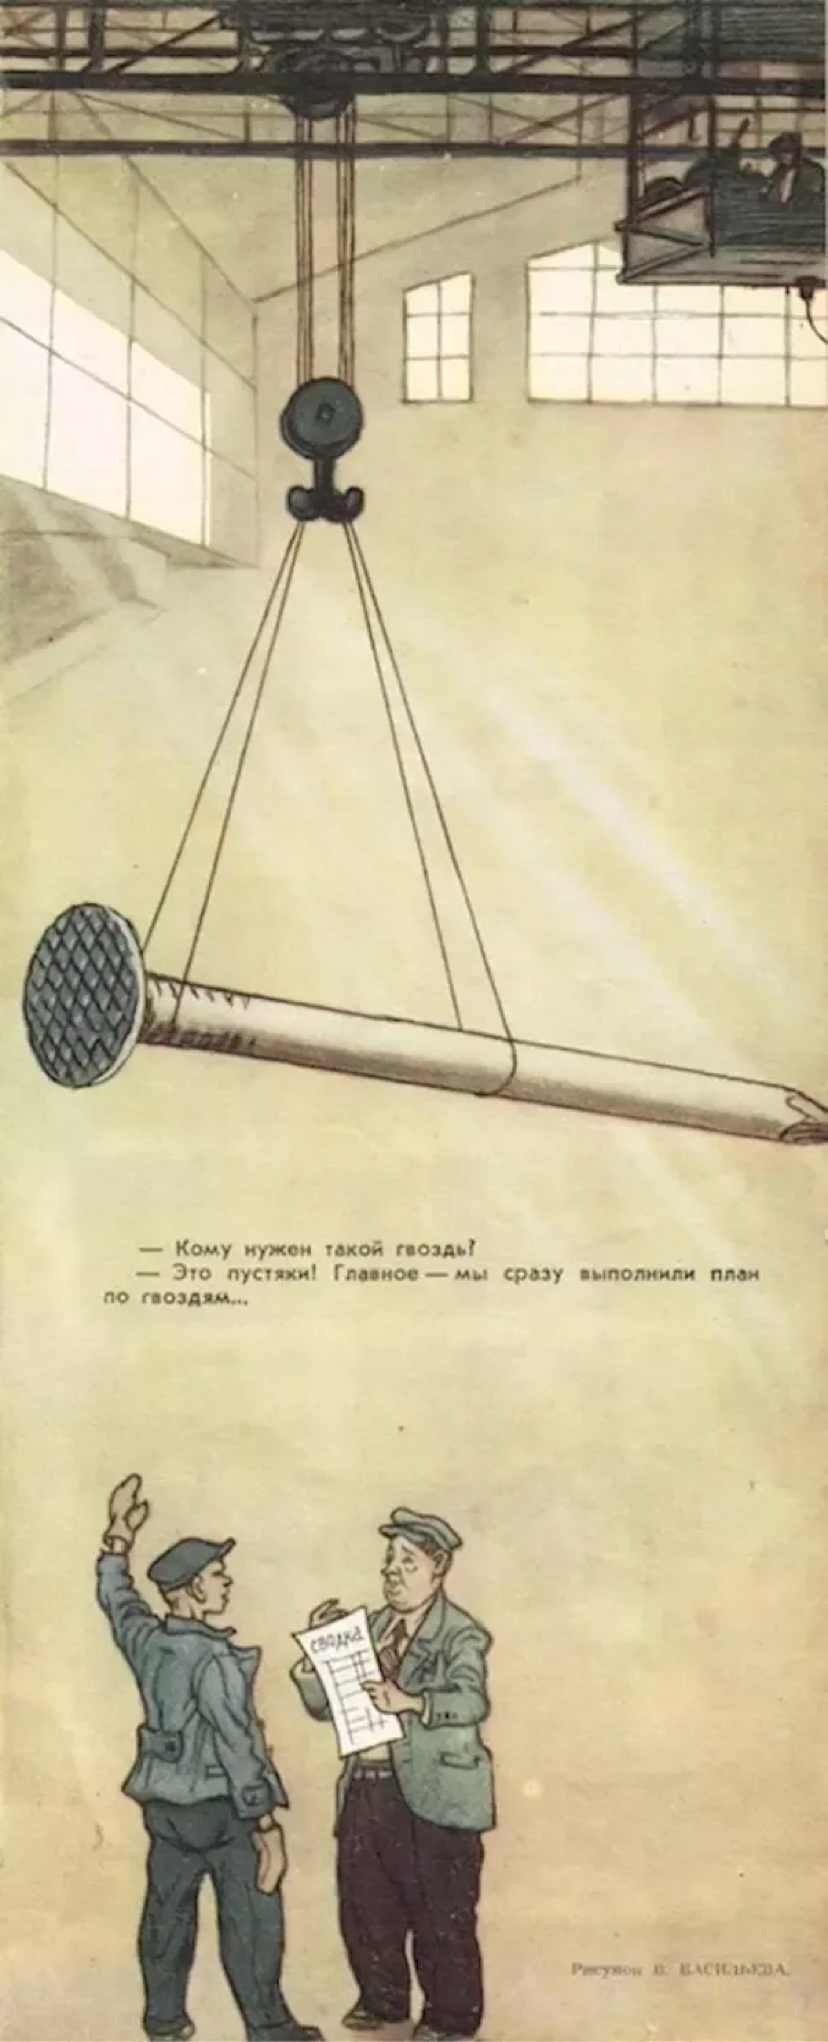 Cartoon from the Soviet satirical magazine "Krokodil", 1922, that illustrates Goodhart's law.